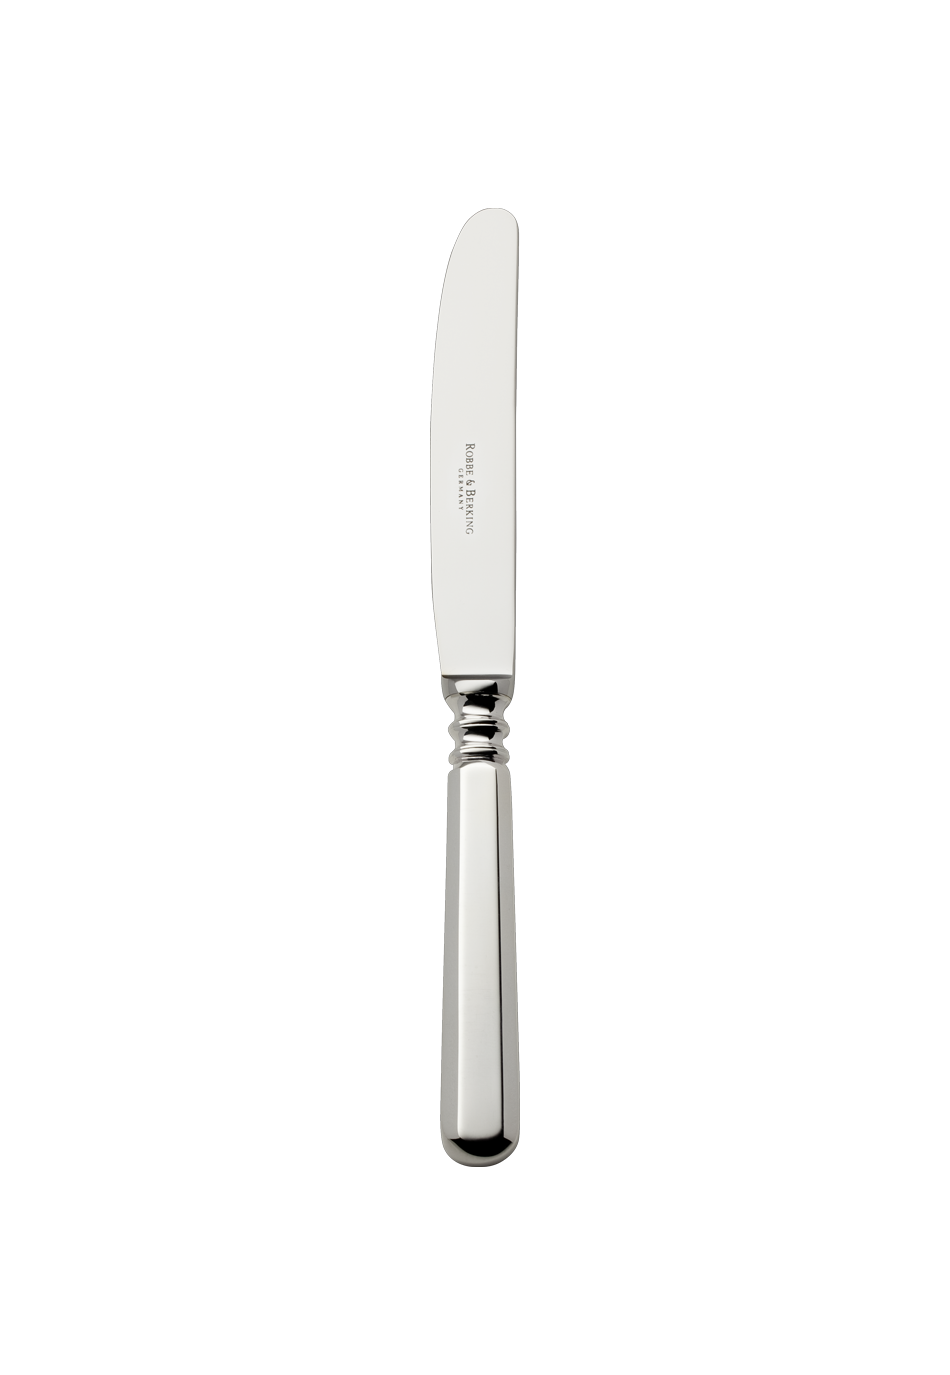 Alt-Spaten Dessert Knife (150g massive silverplated)